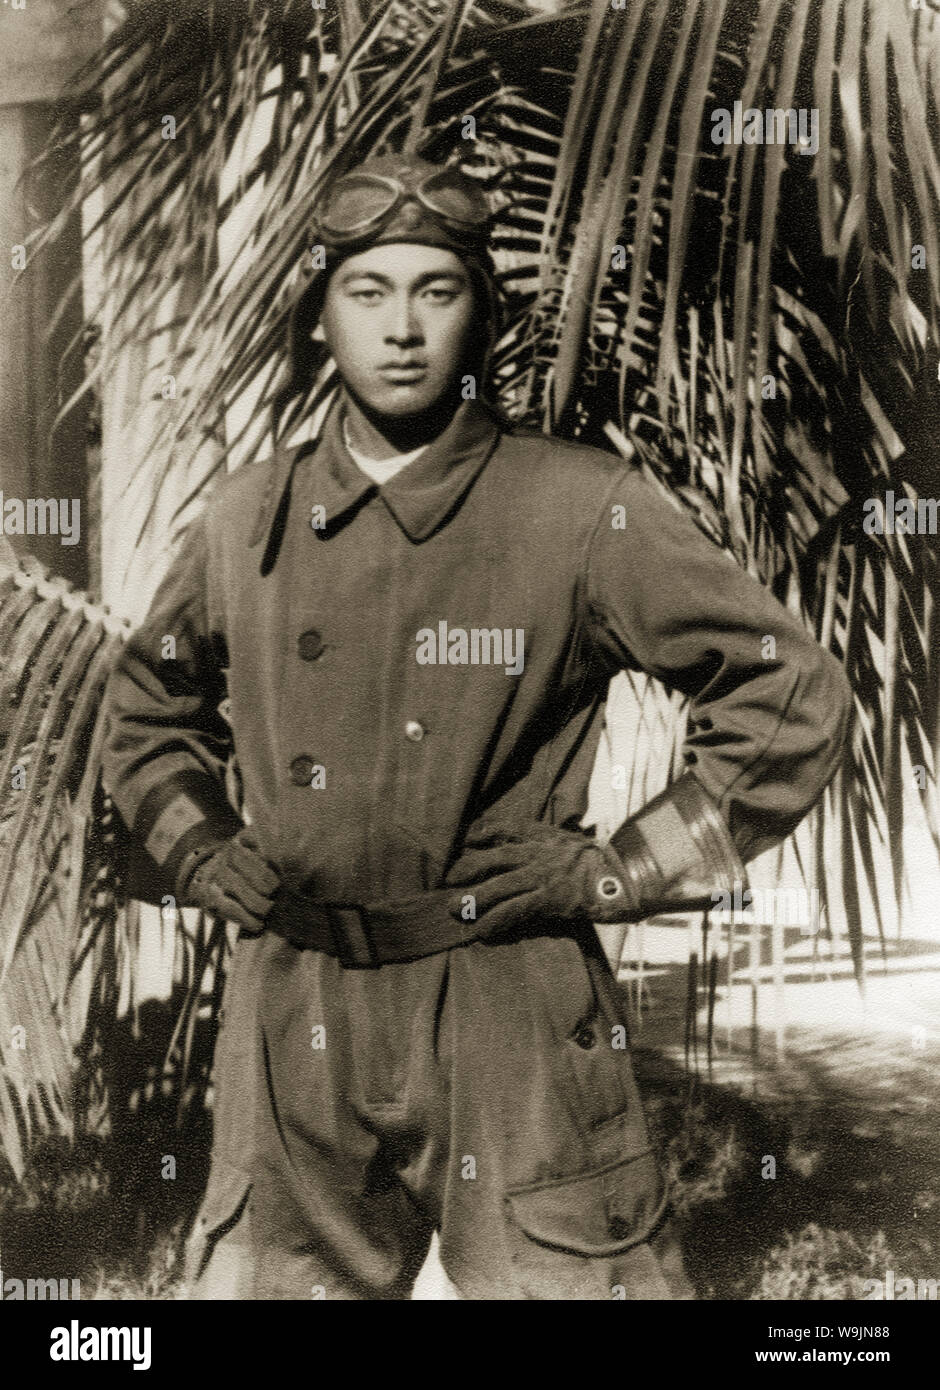 1940s Japan - WWII Japanese Fighter Pilot ] — Japanese fighter pilot in  uniform. 20th century vintage gelatin silver print Stock Photo - Alamy